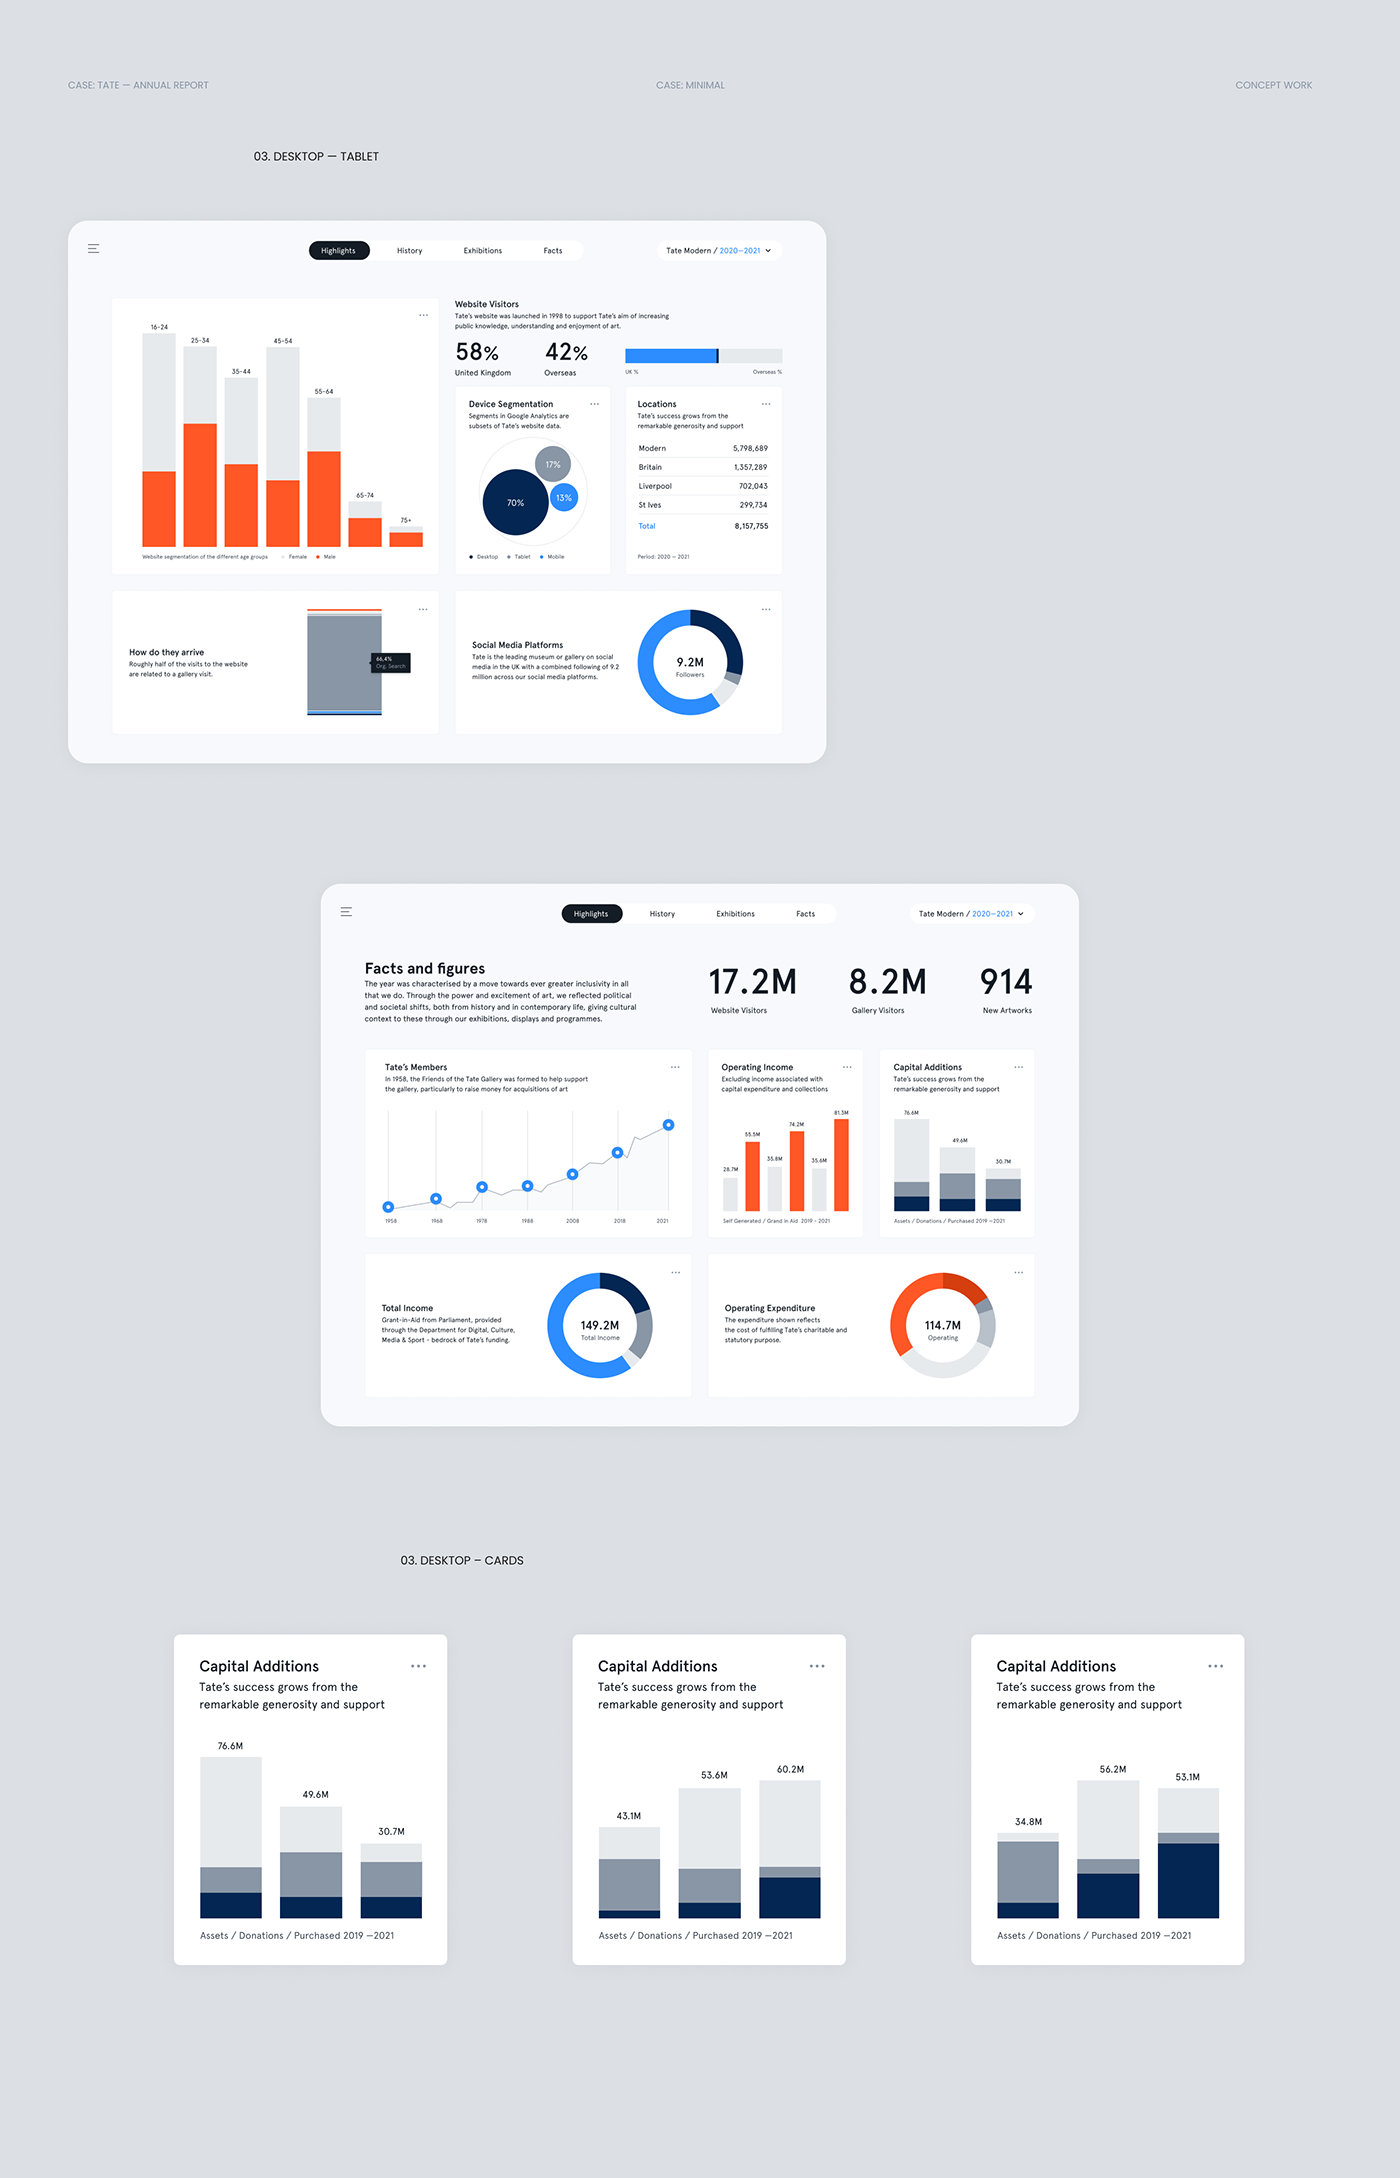 #app #data #Design #interface #product #report #tate #UI #visualisation